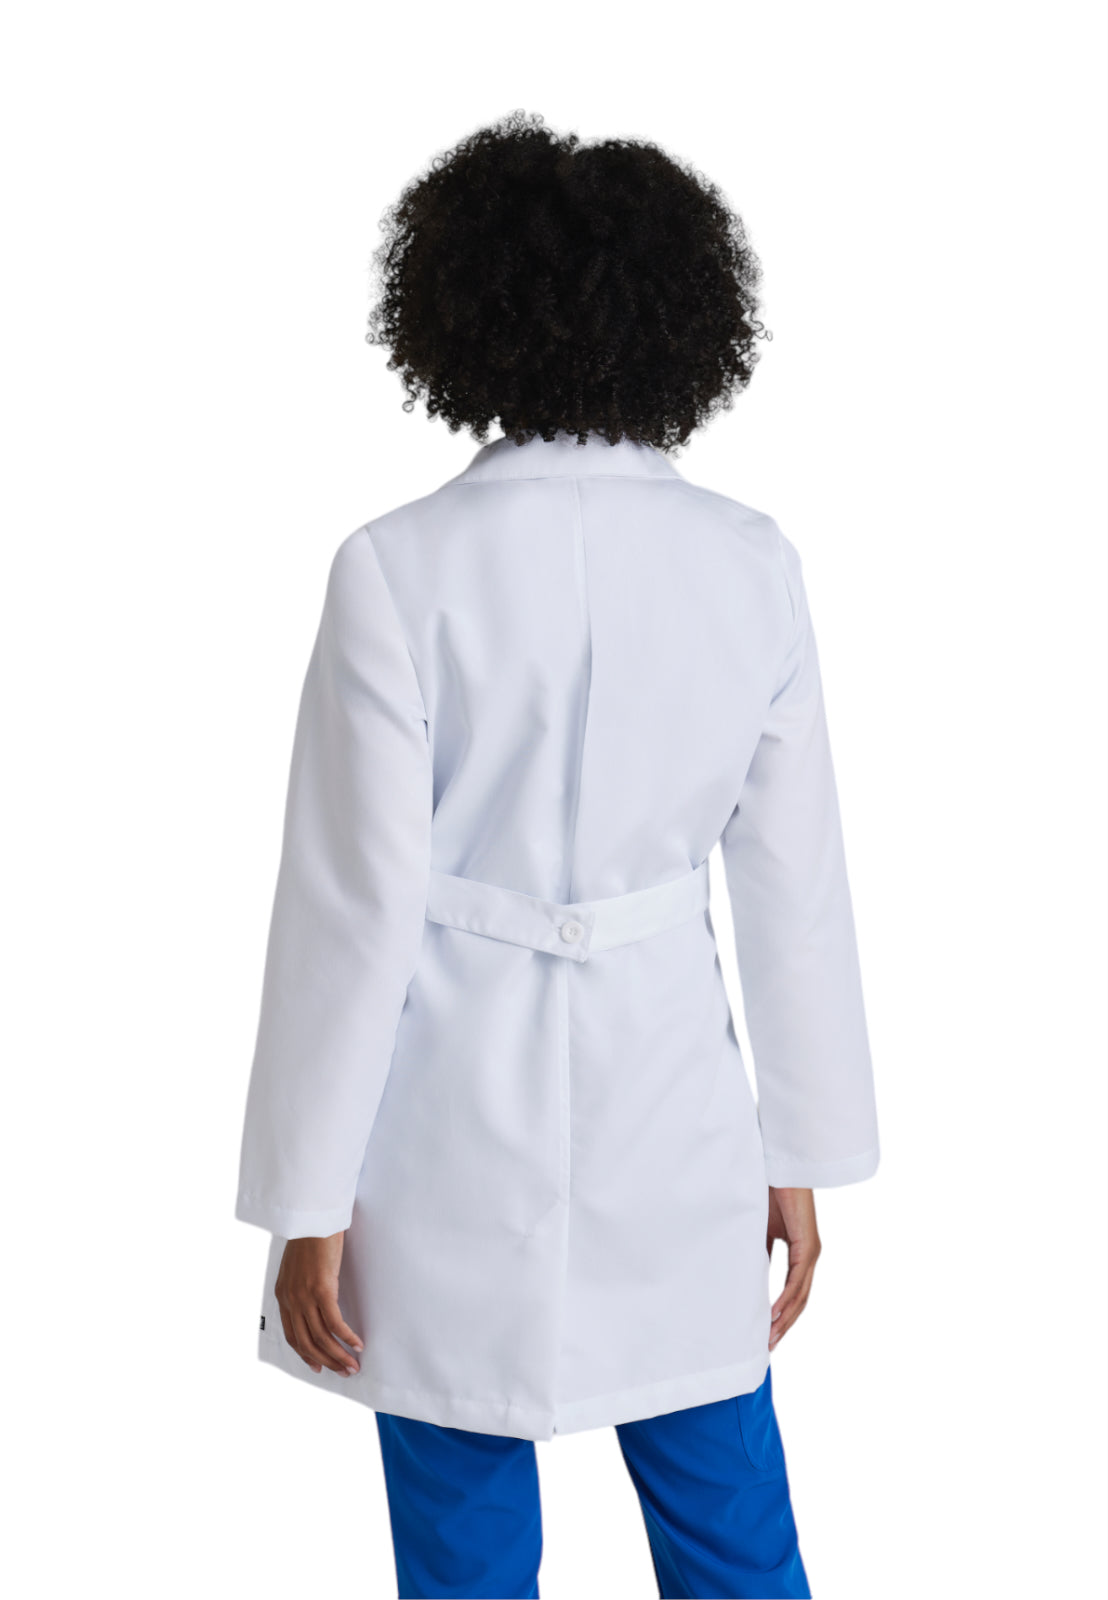 Women's Princess Seam Lily Lab Coat - 4481 - White